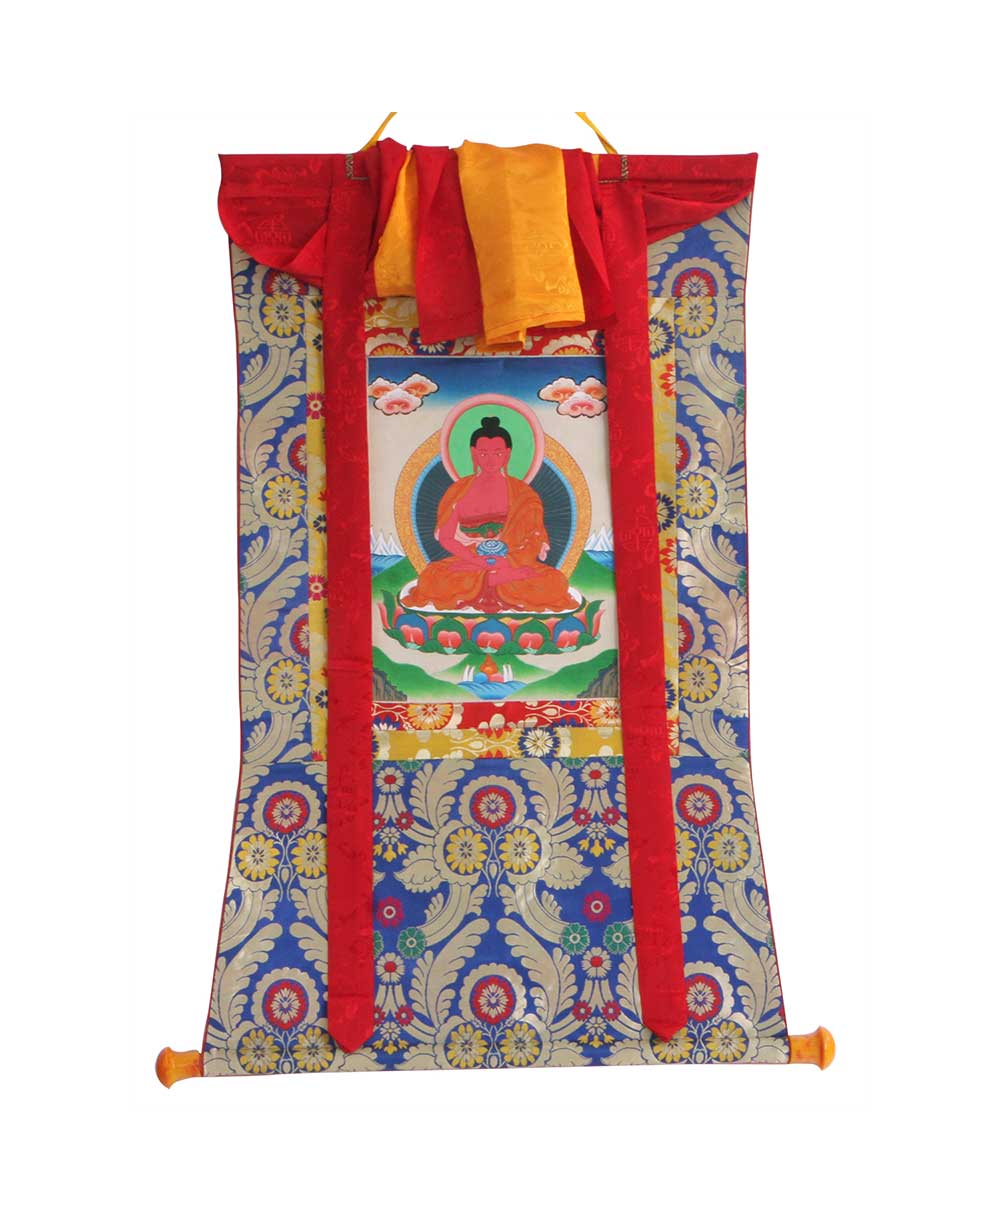 Amitabha Buddha Tibetan Thangka Wall Hanging -